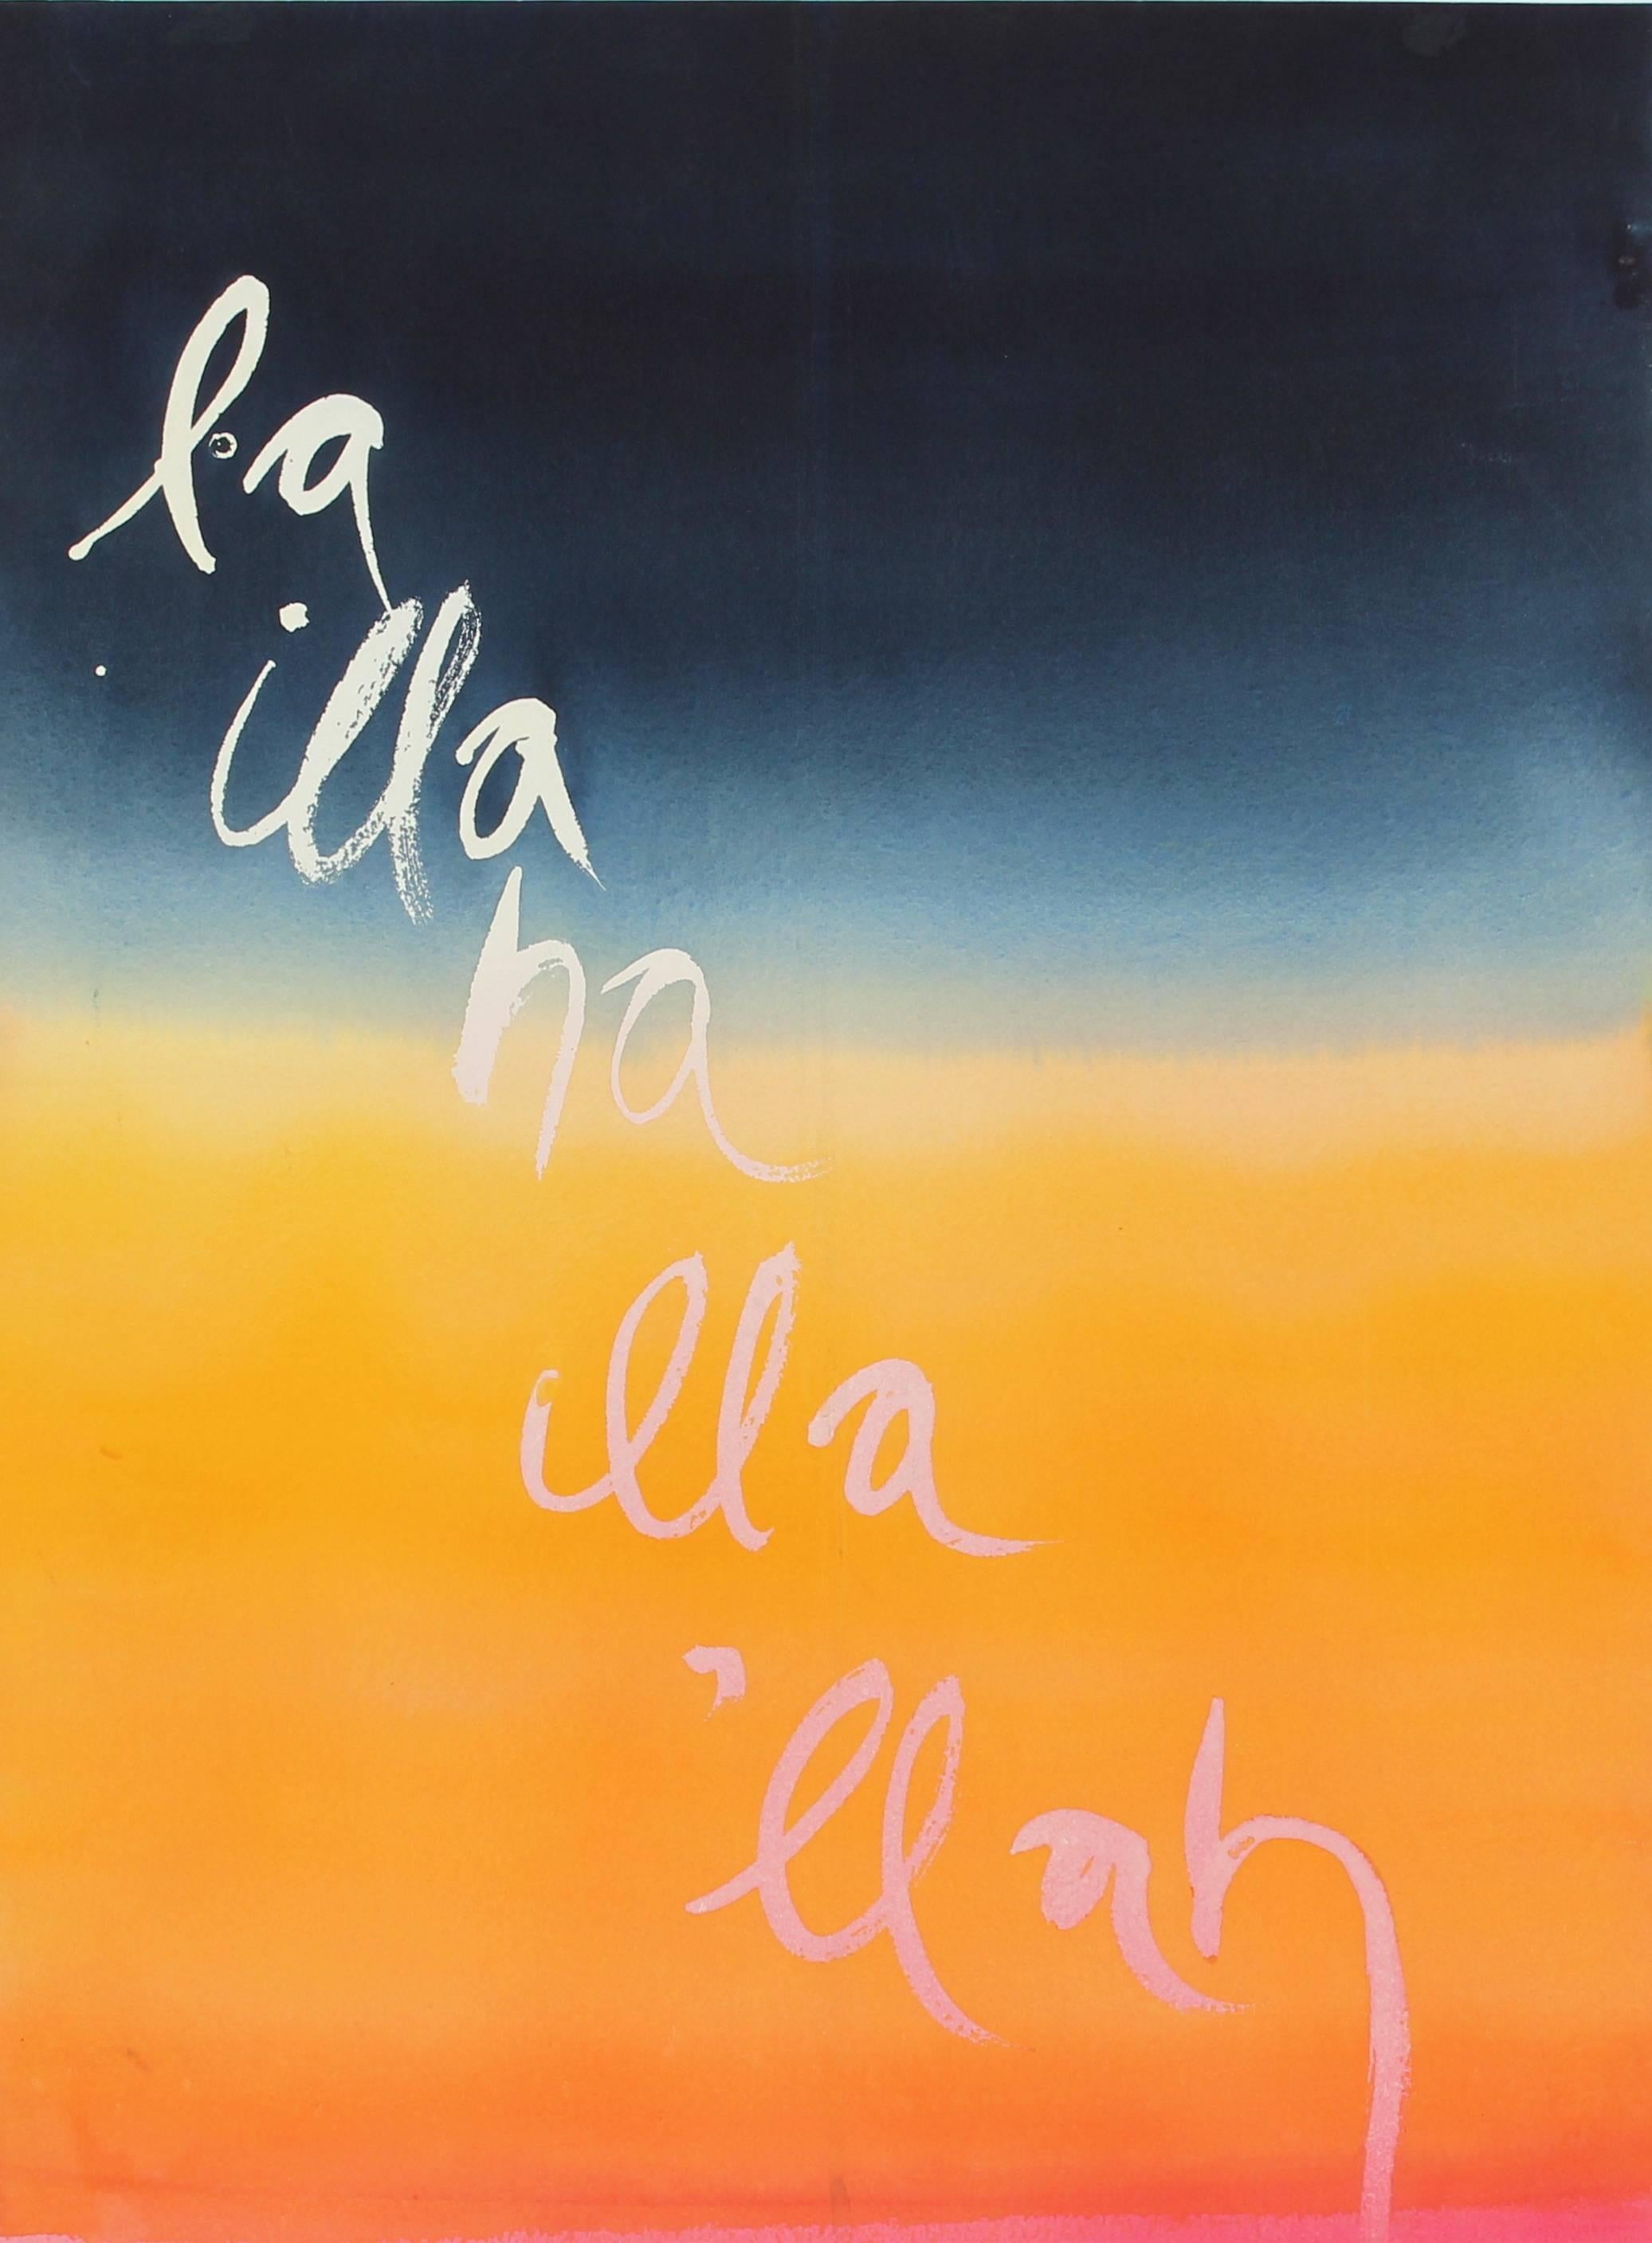 Hugh Wiley Abstract Drawing - Meditative Sunset Abstract